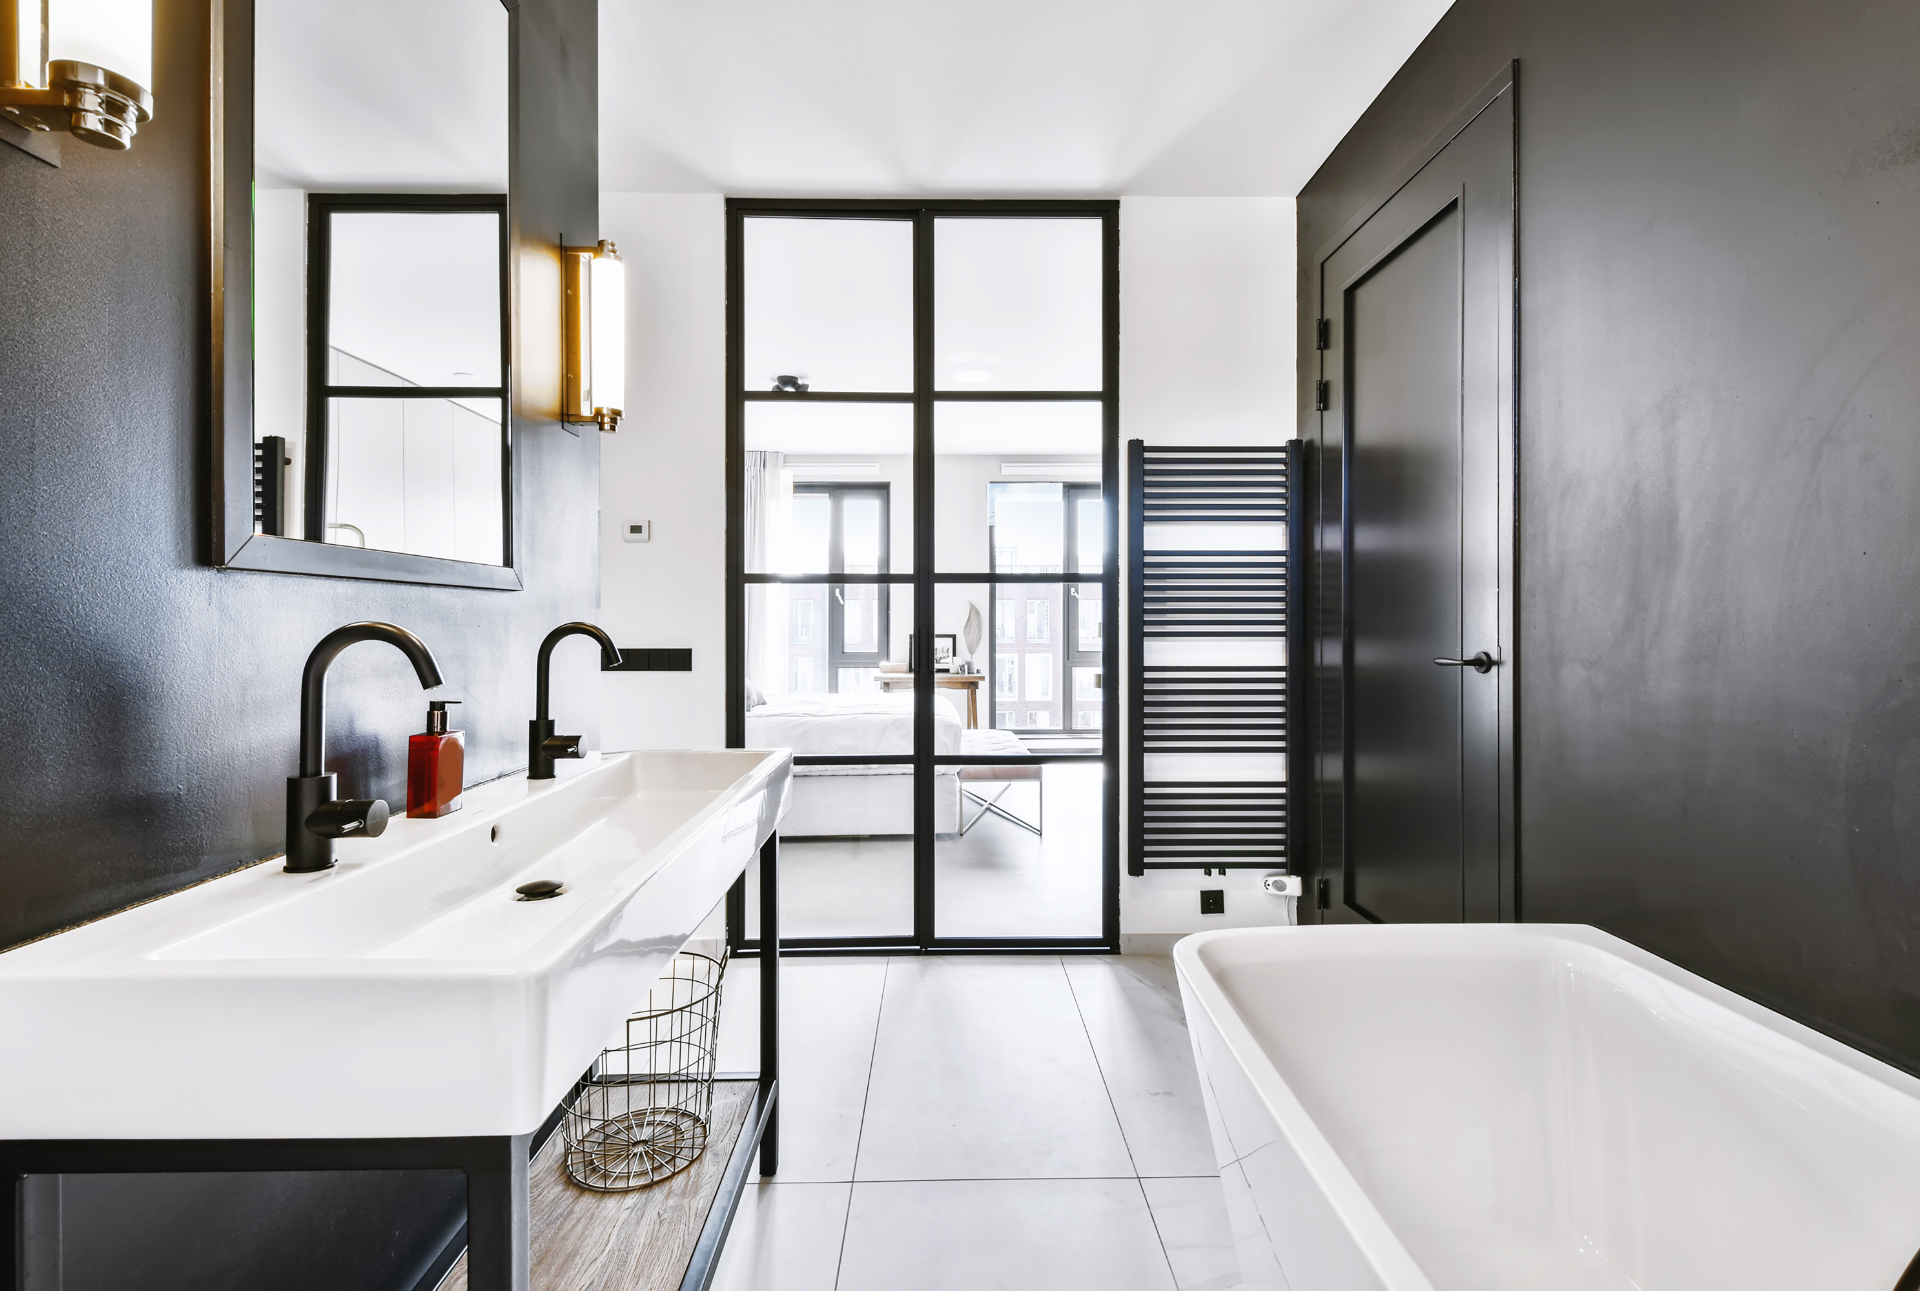 sleek modern bathroom design with black fixtures